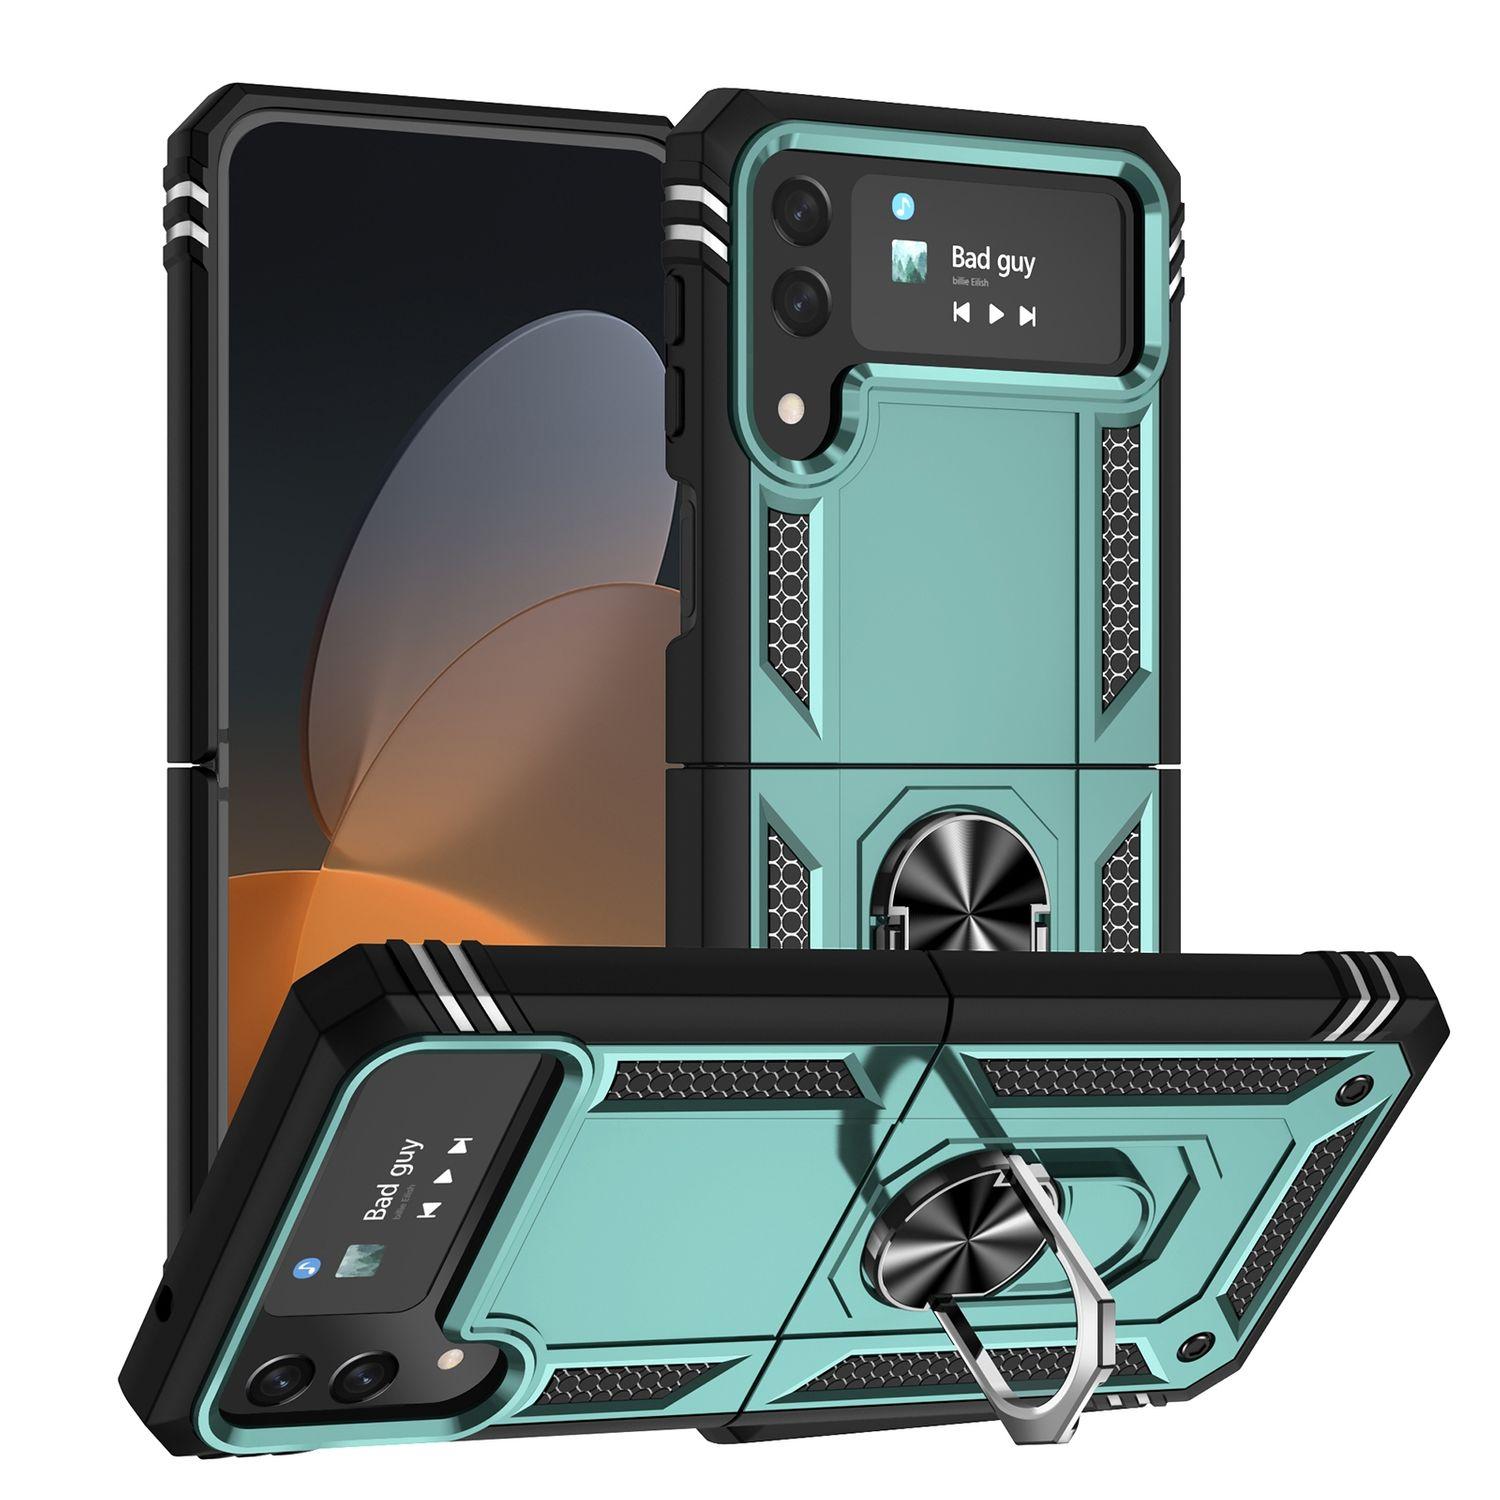 Case, Samsung, 5G, Flip4 Galaxy Backcover, DESIGN Dunkelgrün KÖNIG Z